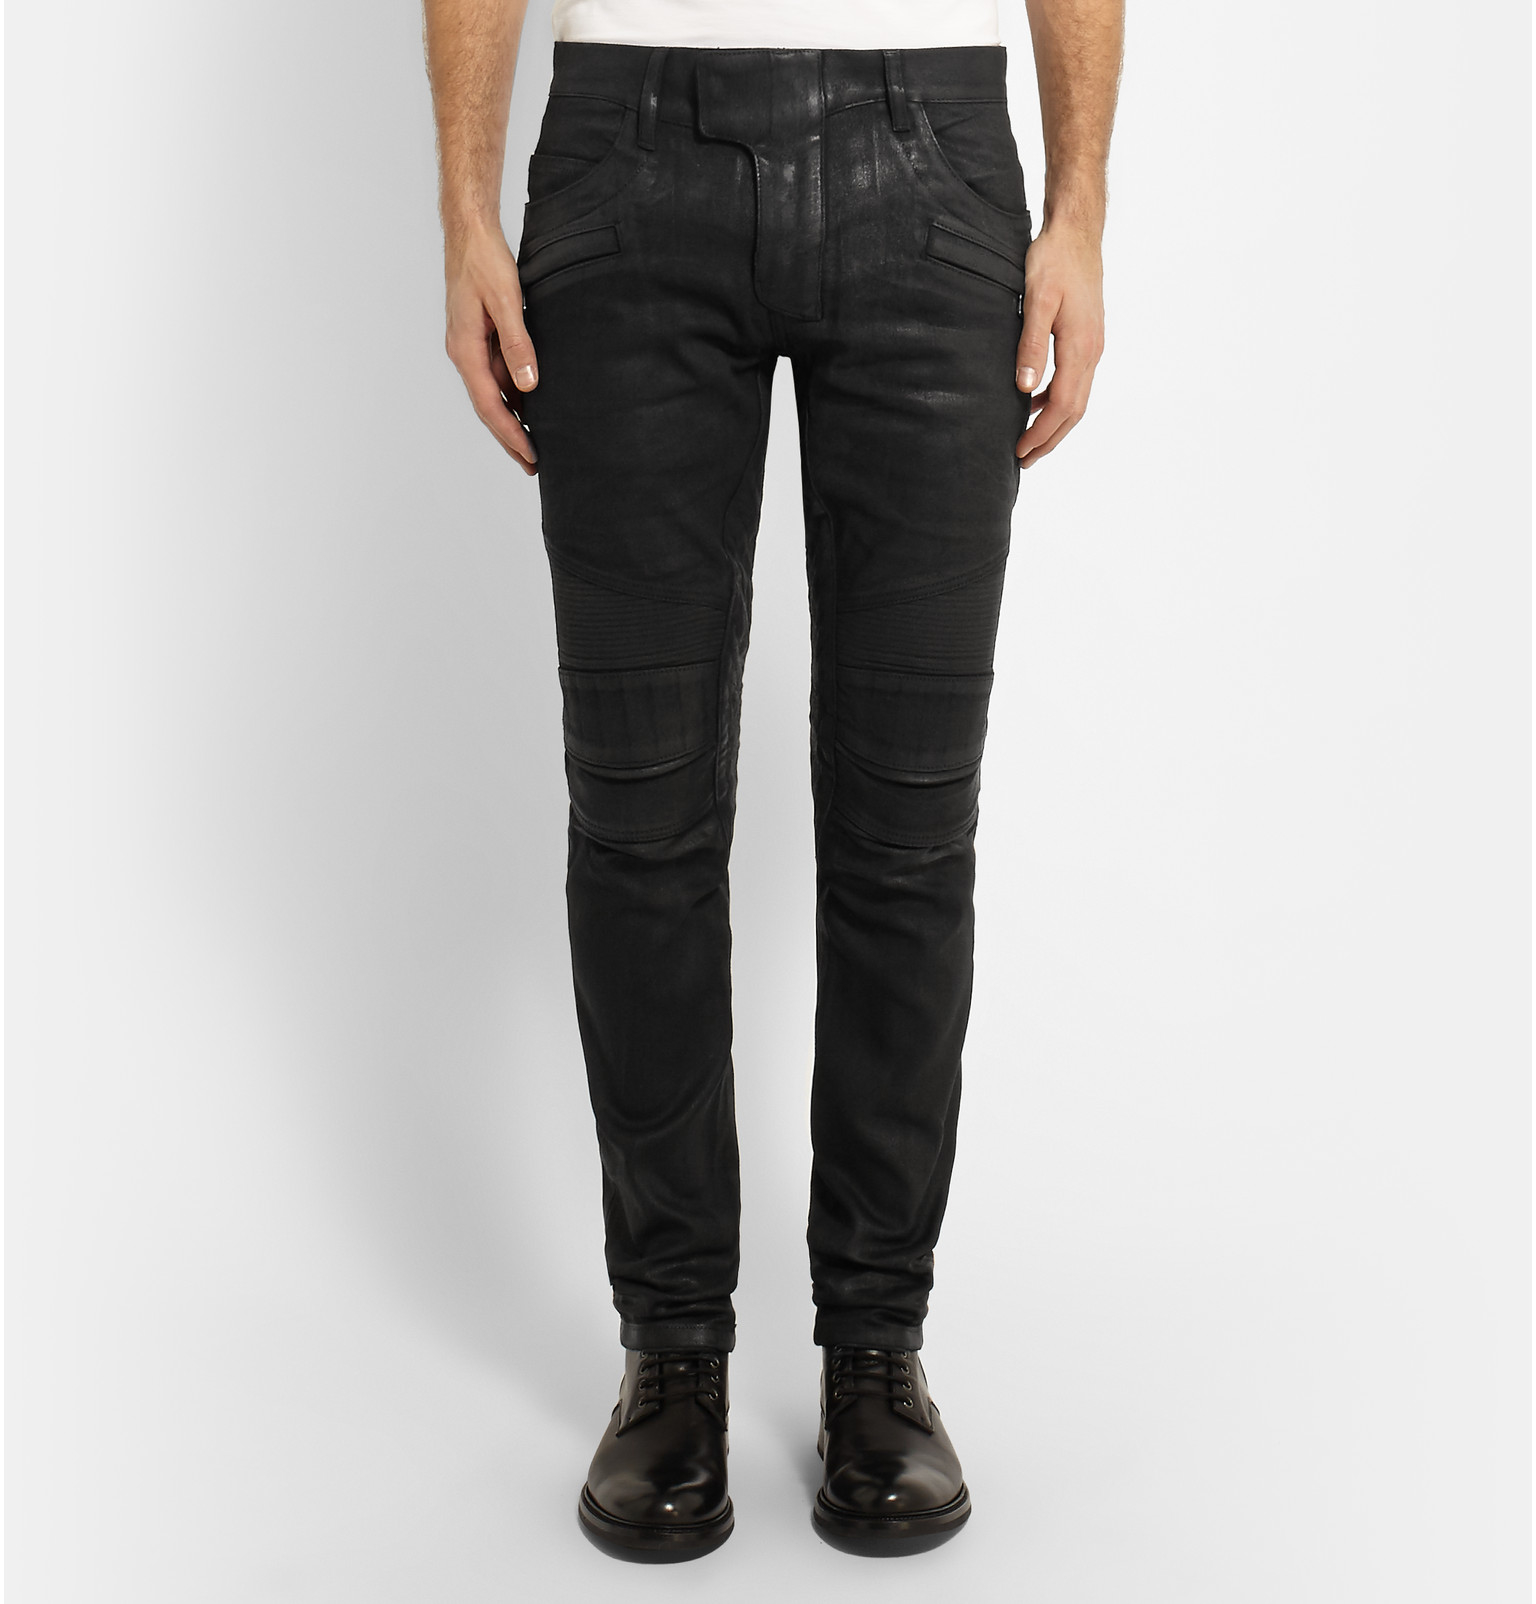 Balmain Skinny-fit Waxed-denim Jeans in Black for Men - Lyst